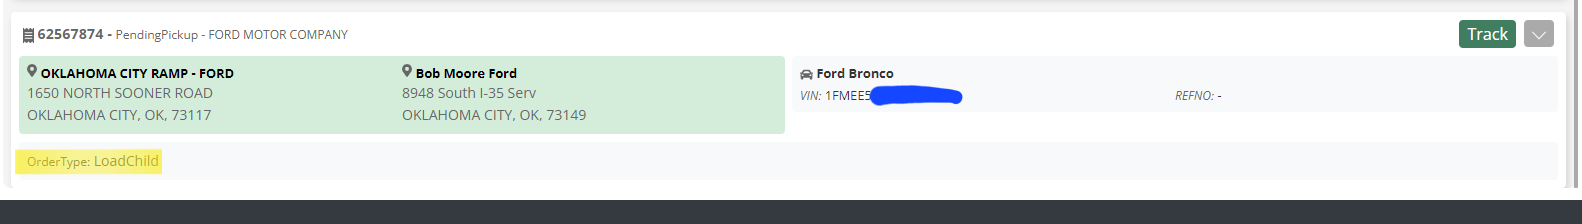 Ford Bronco 🛠 1/3/22 Build Week Group InkedScreenshot 2022-01-26 at 10-11-37 Manage_LI